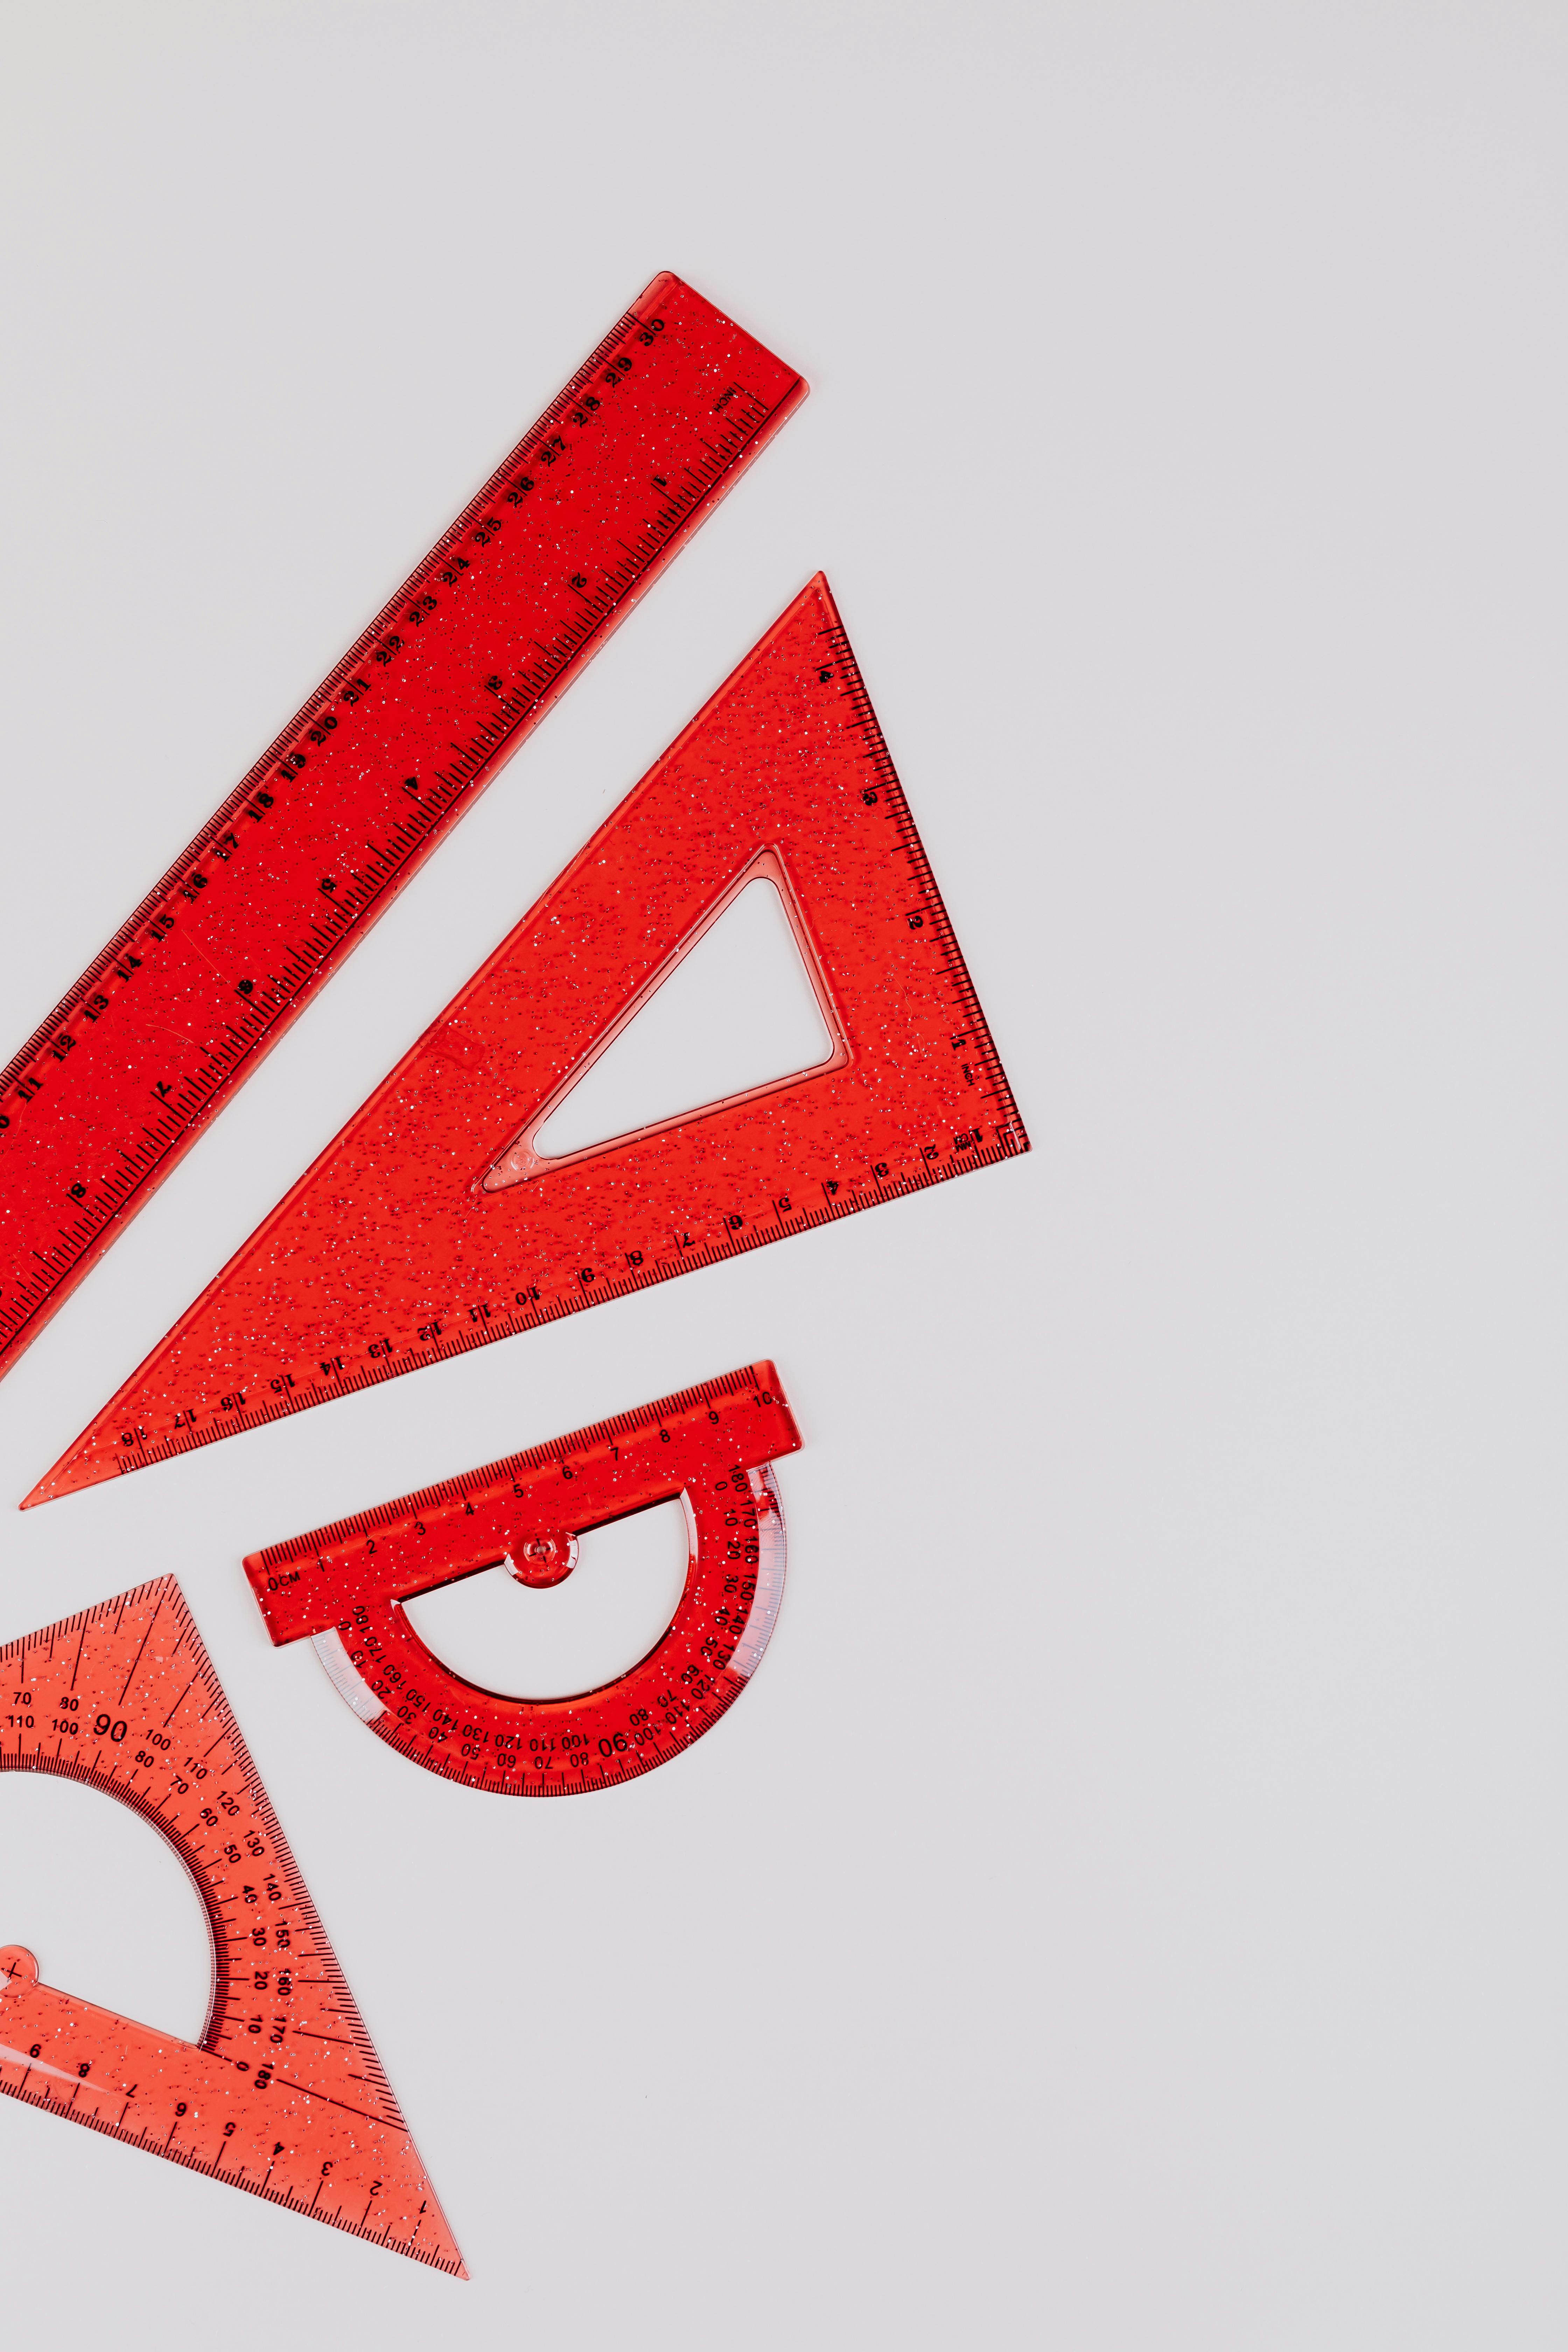 3 Red Triangles Logo - LogoDix